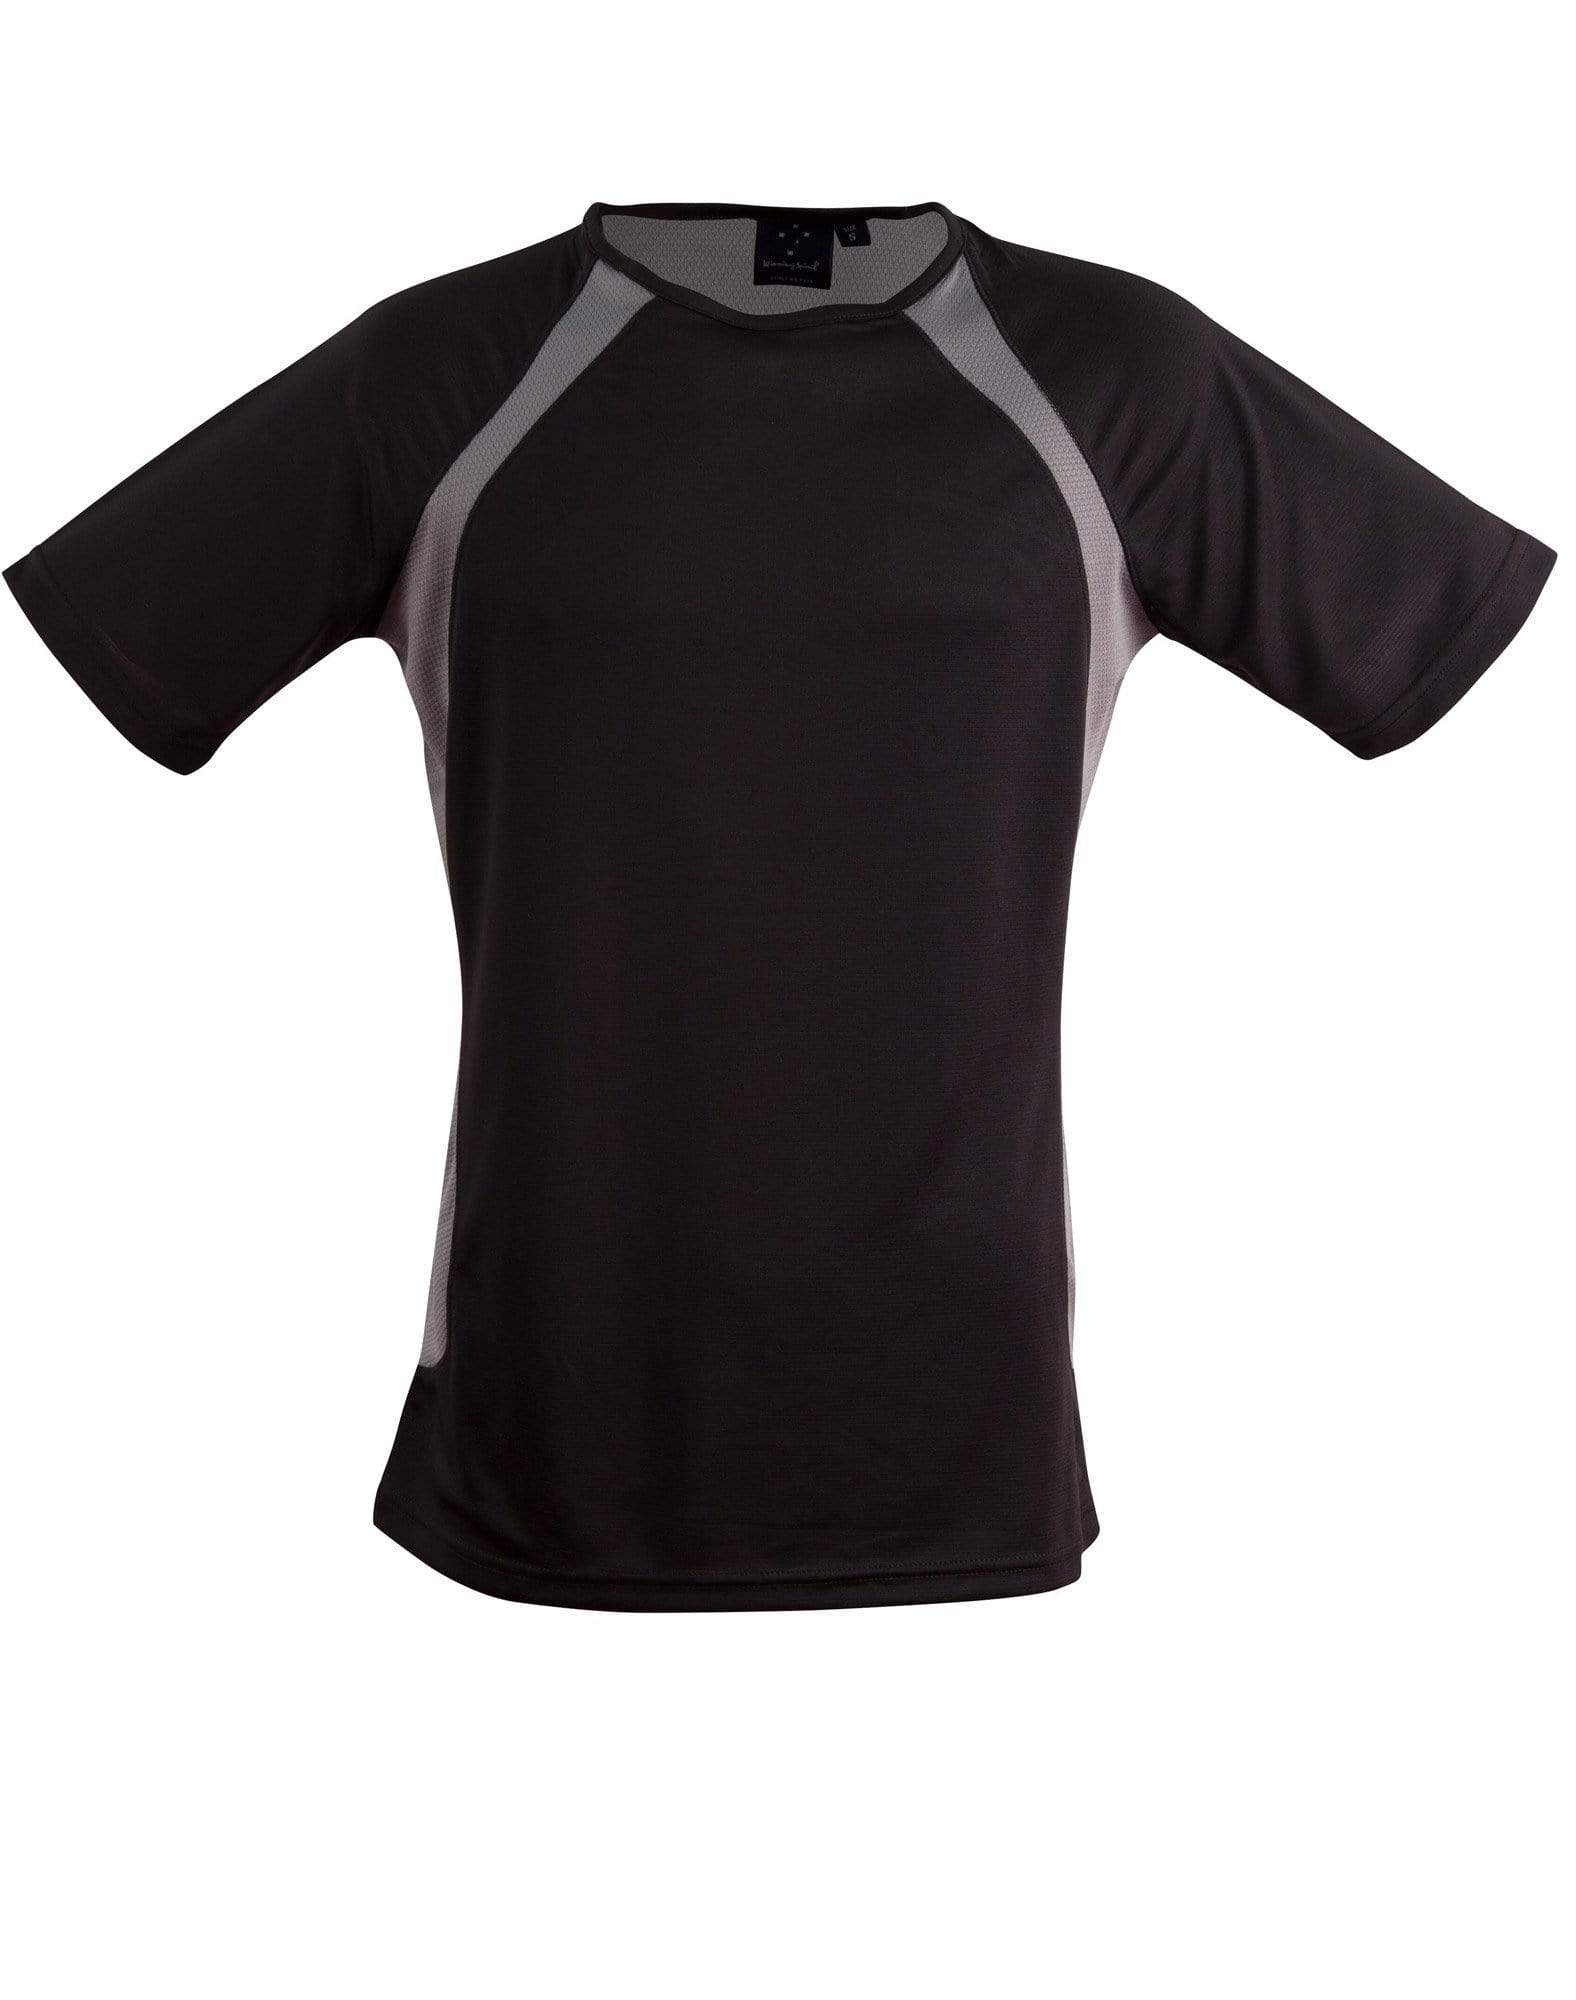 Winning Spirit Casual Wear Black/Ash / S Sprint Tee Shirt Men's Ts71